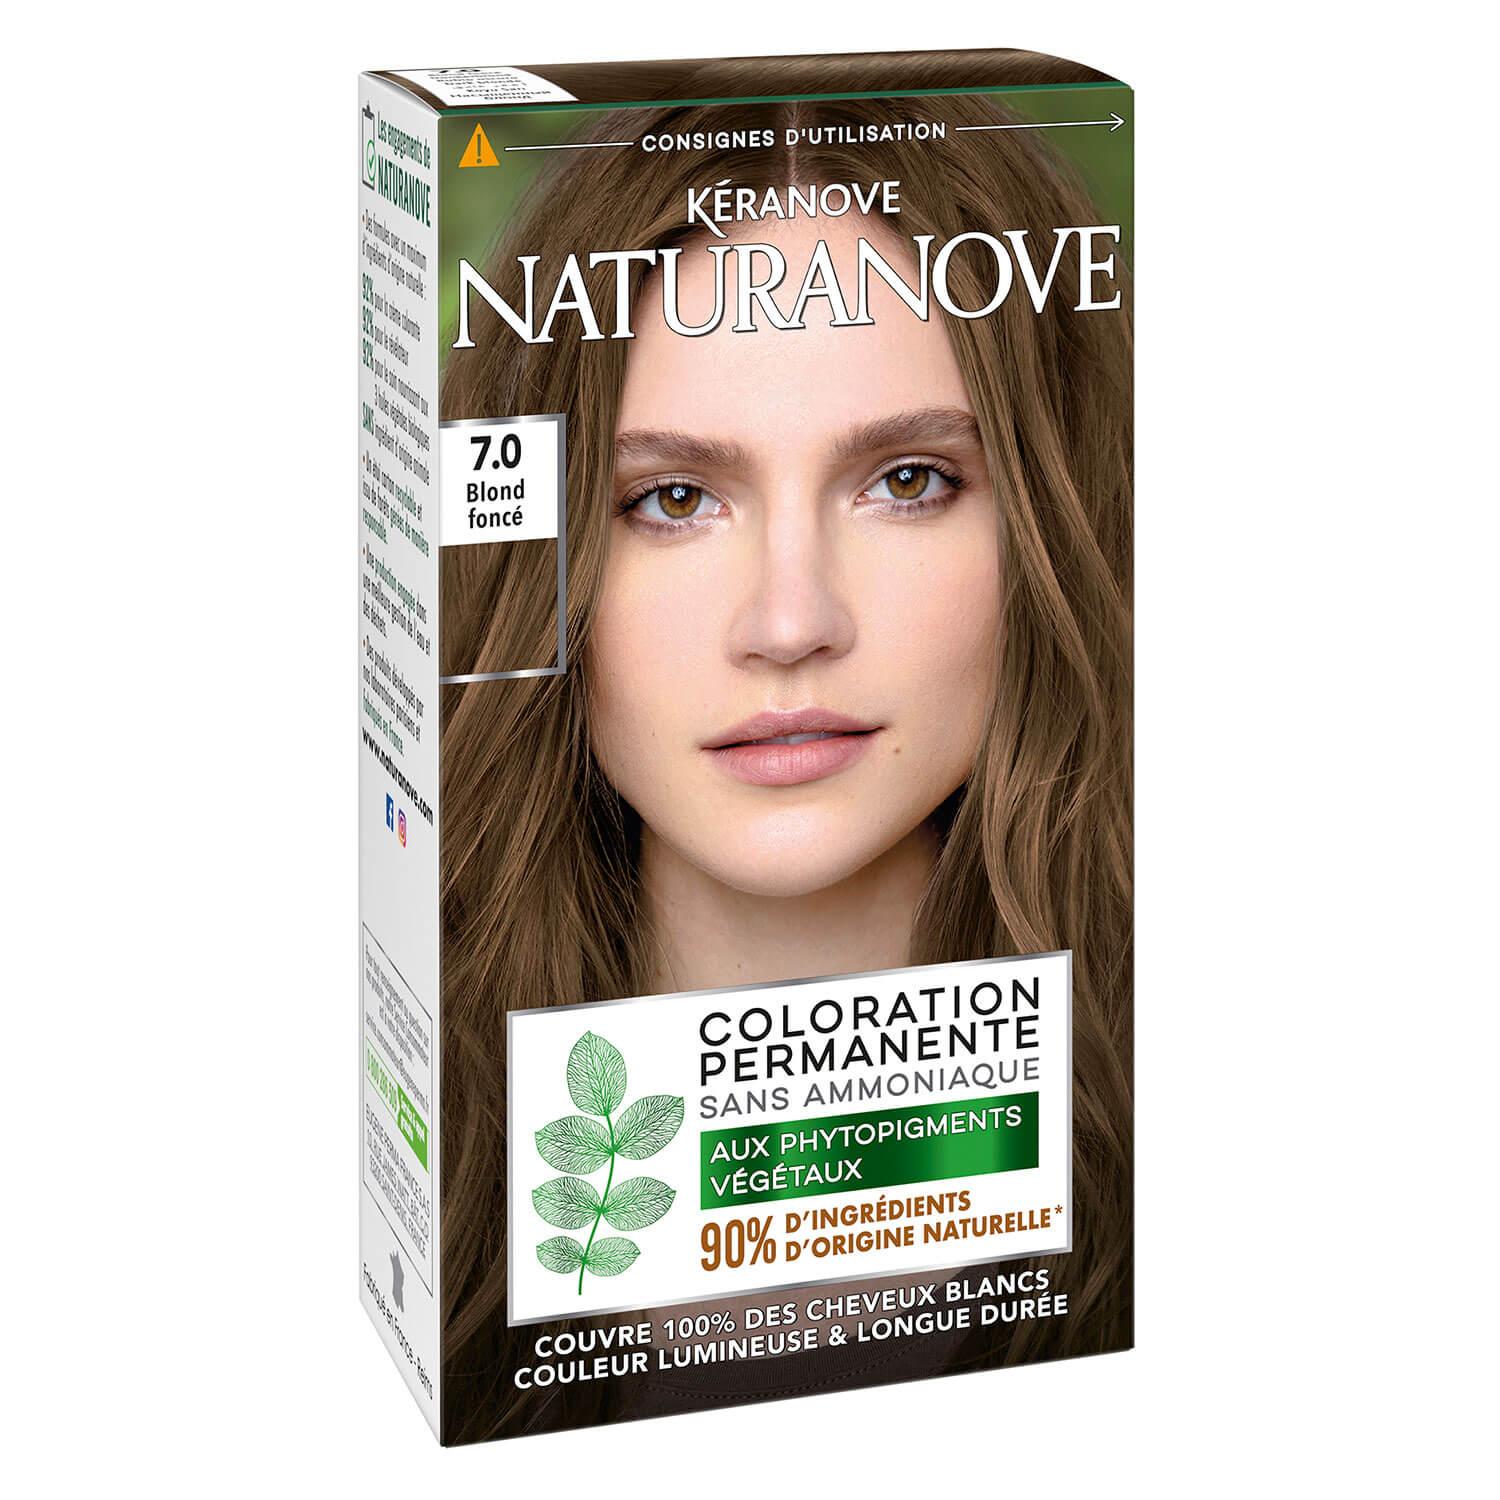 Naturanove - Dauerhafte Haarfarbe Dunkelblond 7.0